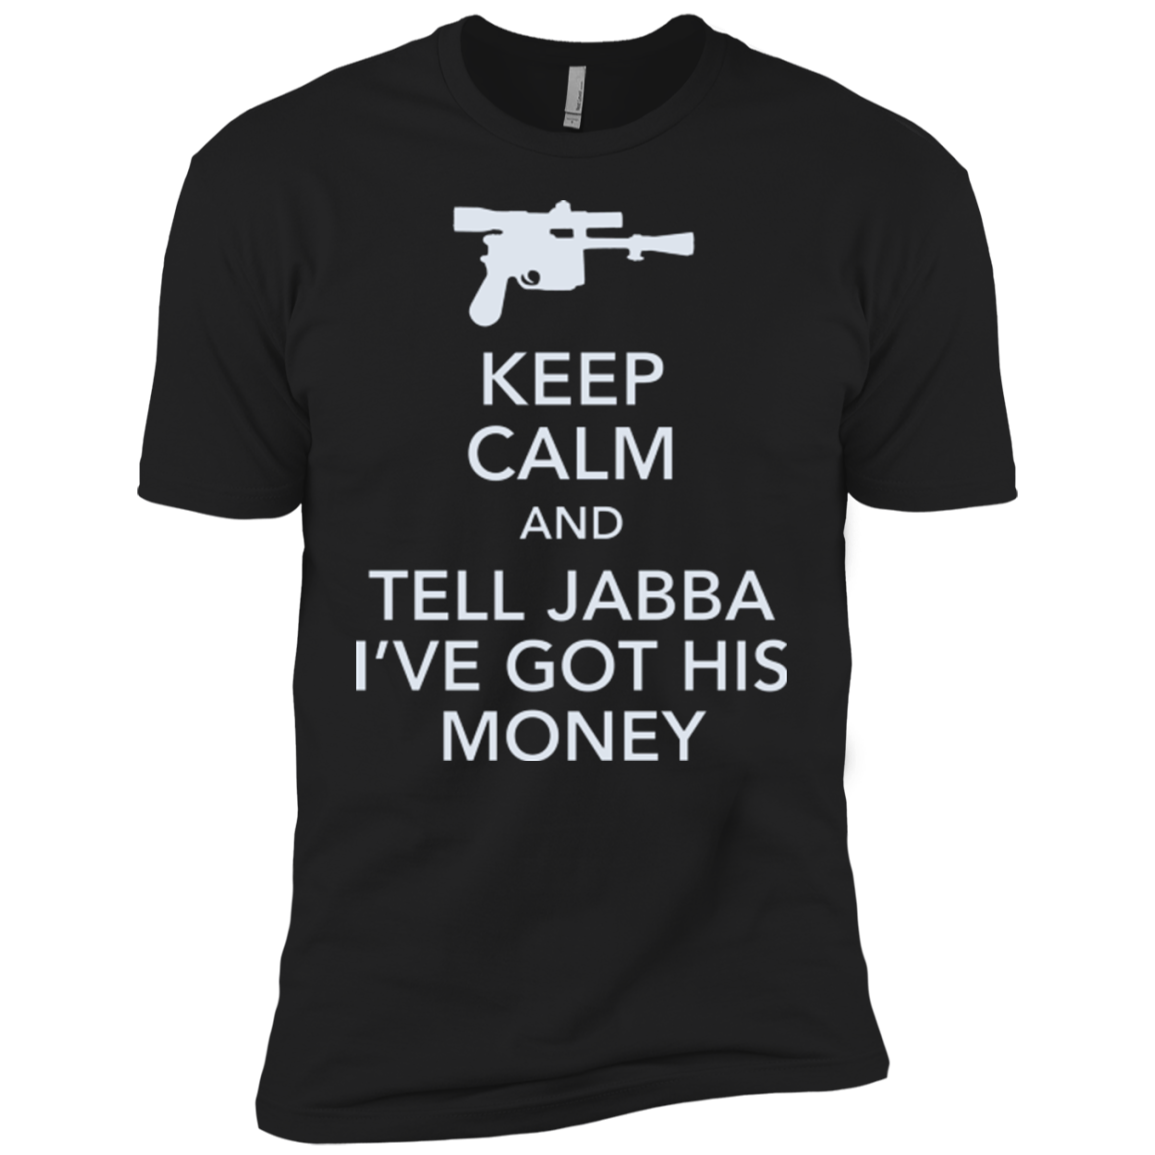 Tell Jabba (2) Boys Premium T-Shirt